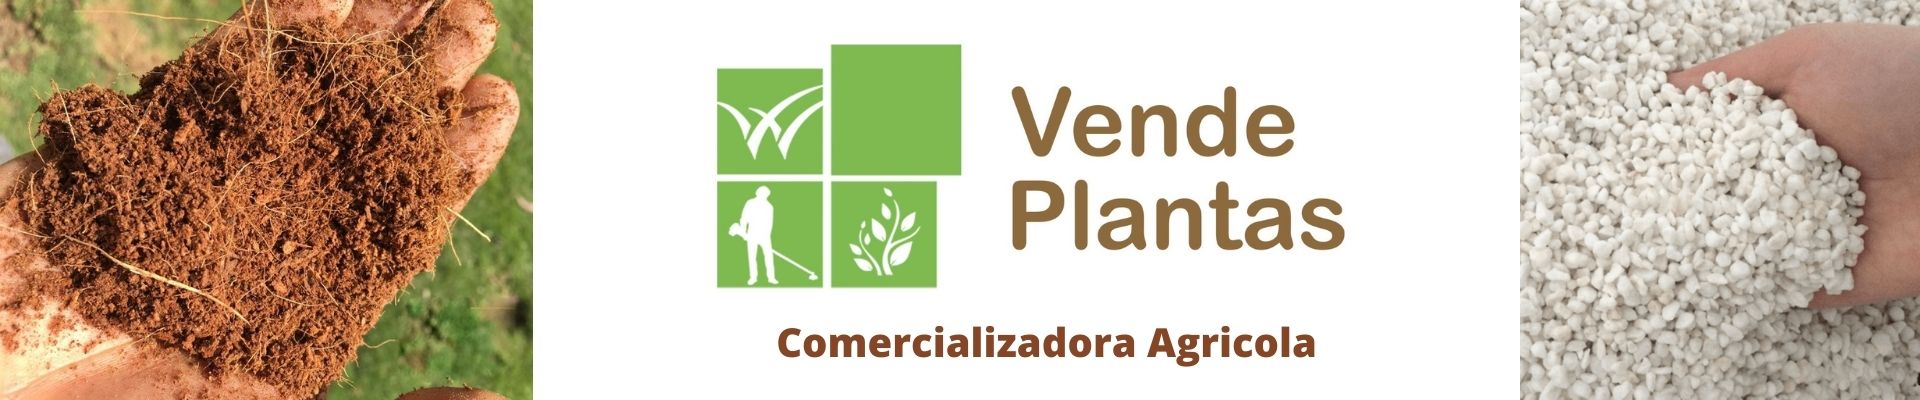 Banner Vende Plantas